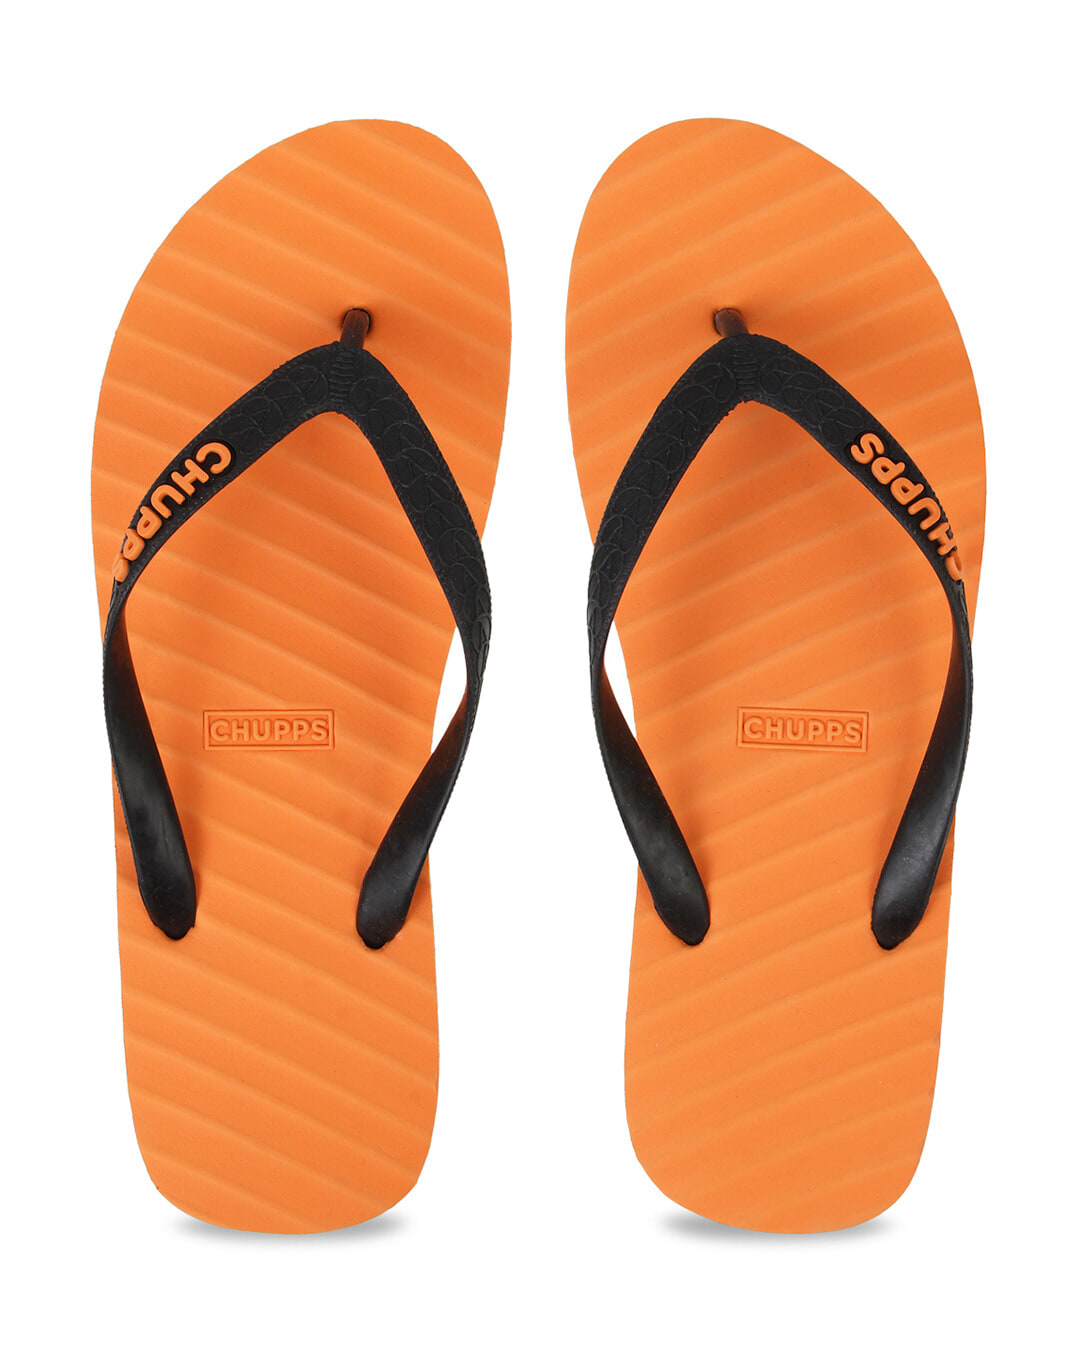 Buy Chupps Men's Banana Leaf Orange Flip Flops Online in India at Bewakoof